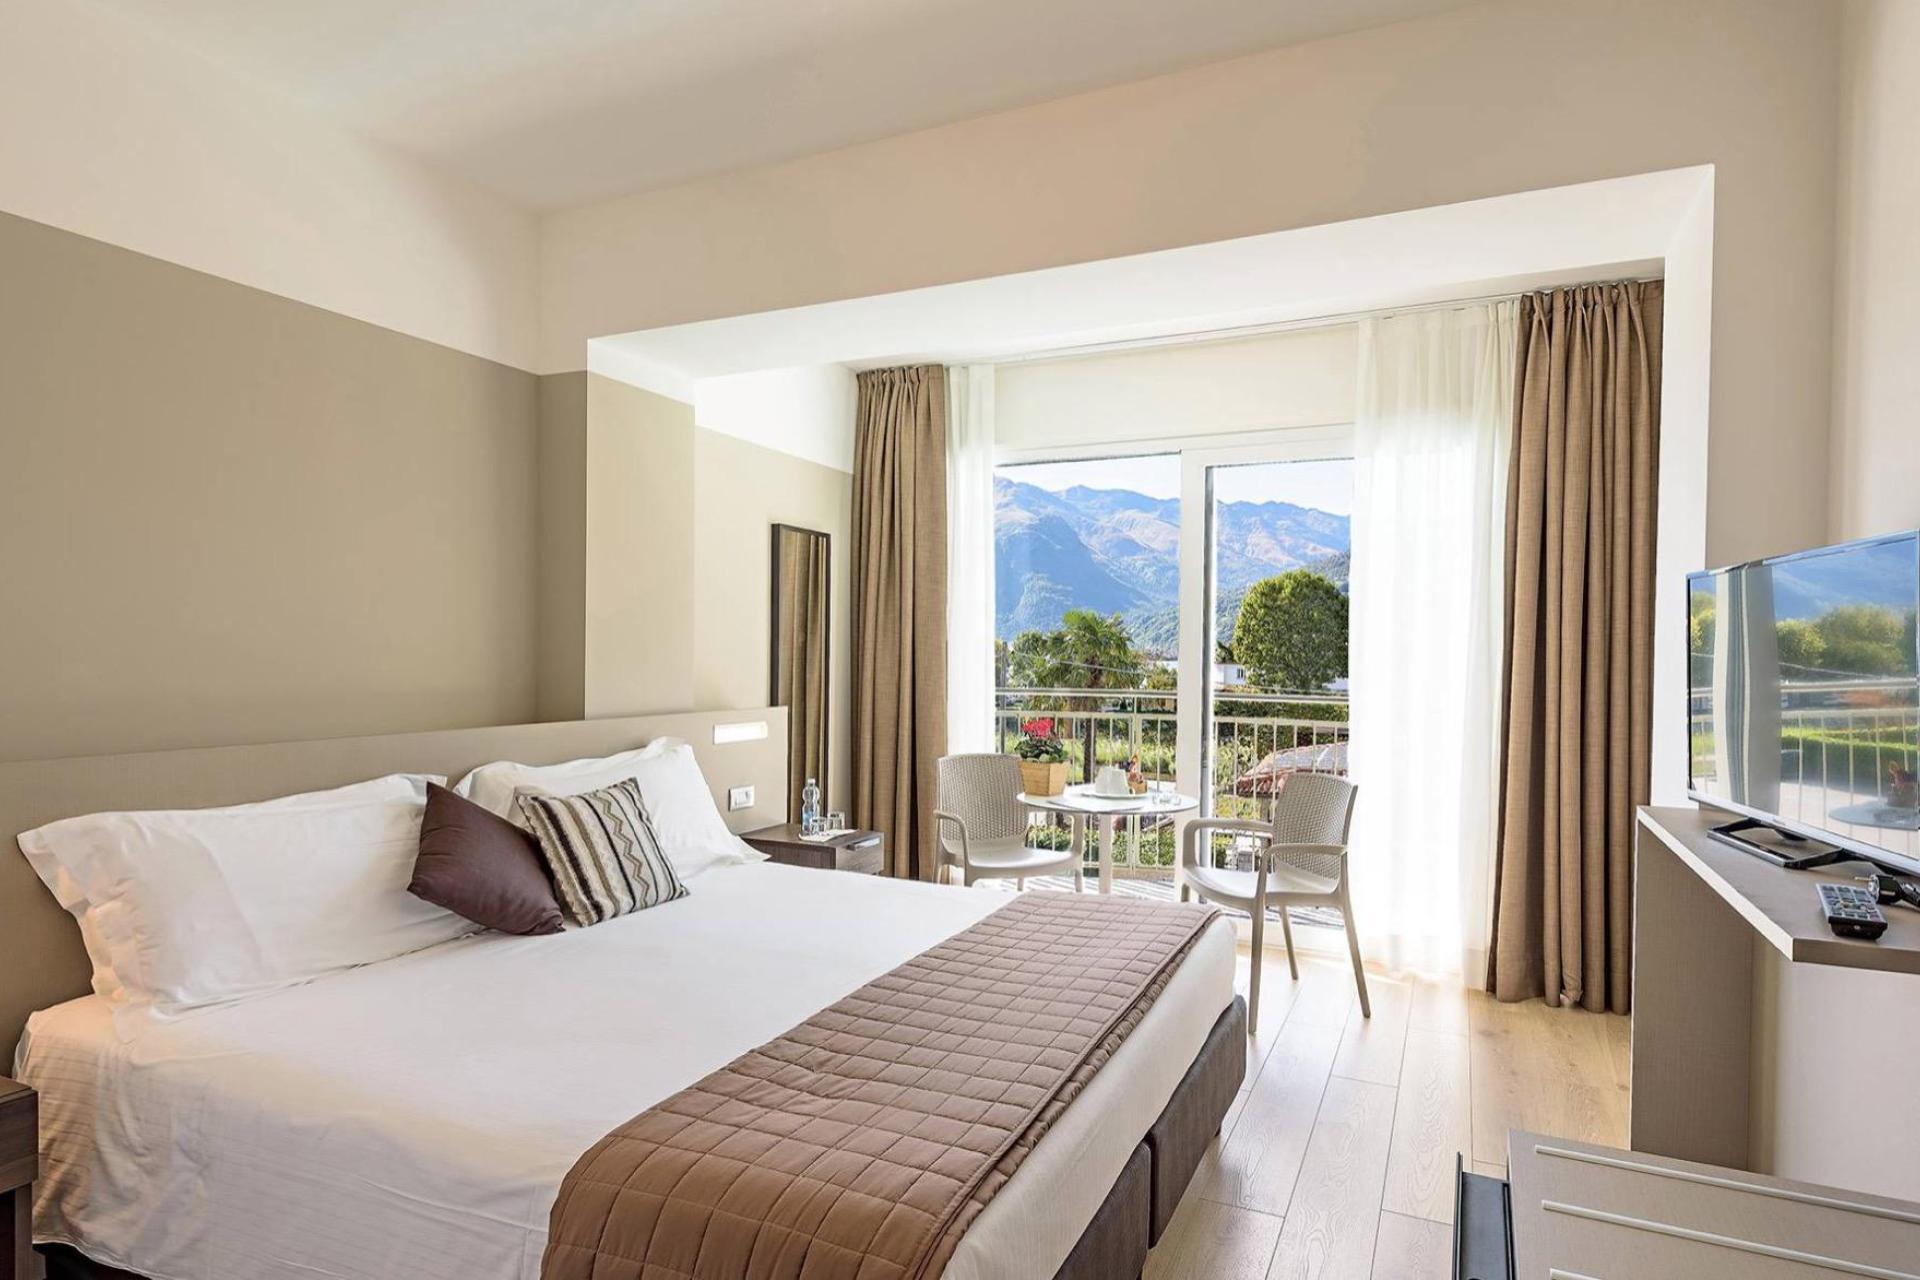 Agriturismo Lake Como and Lake Garda Hotel near the pebble beaches of Lake Como